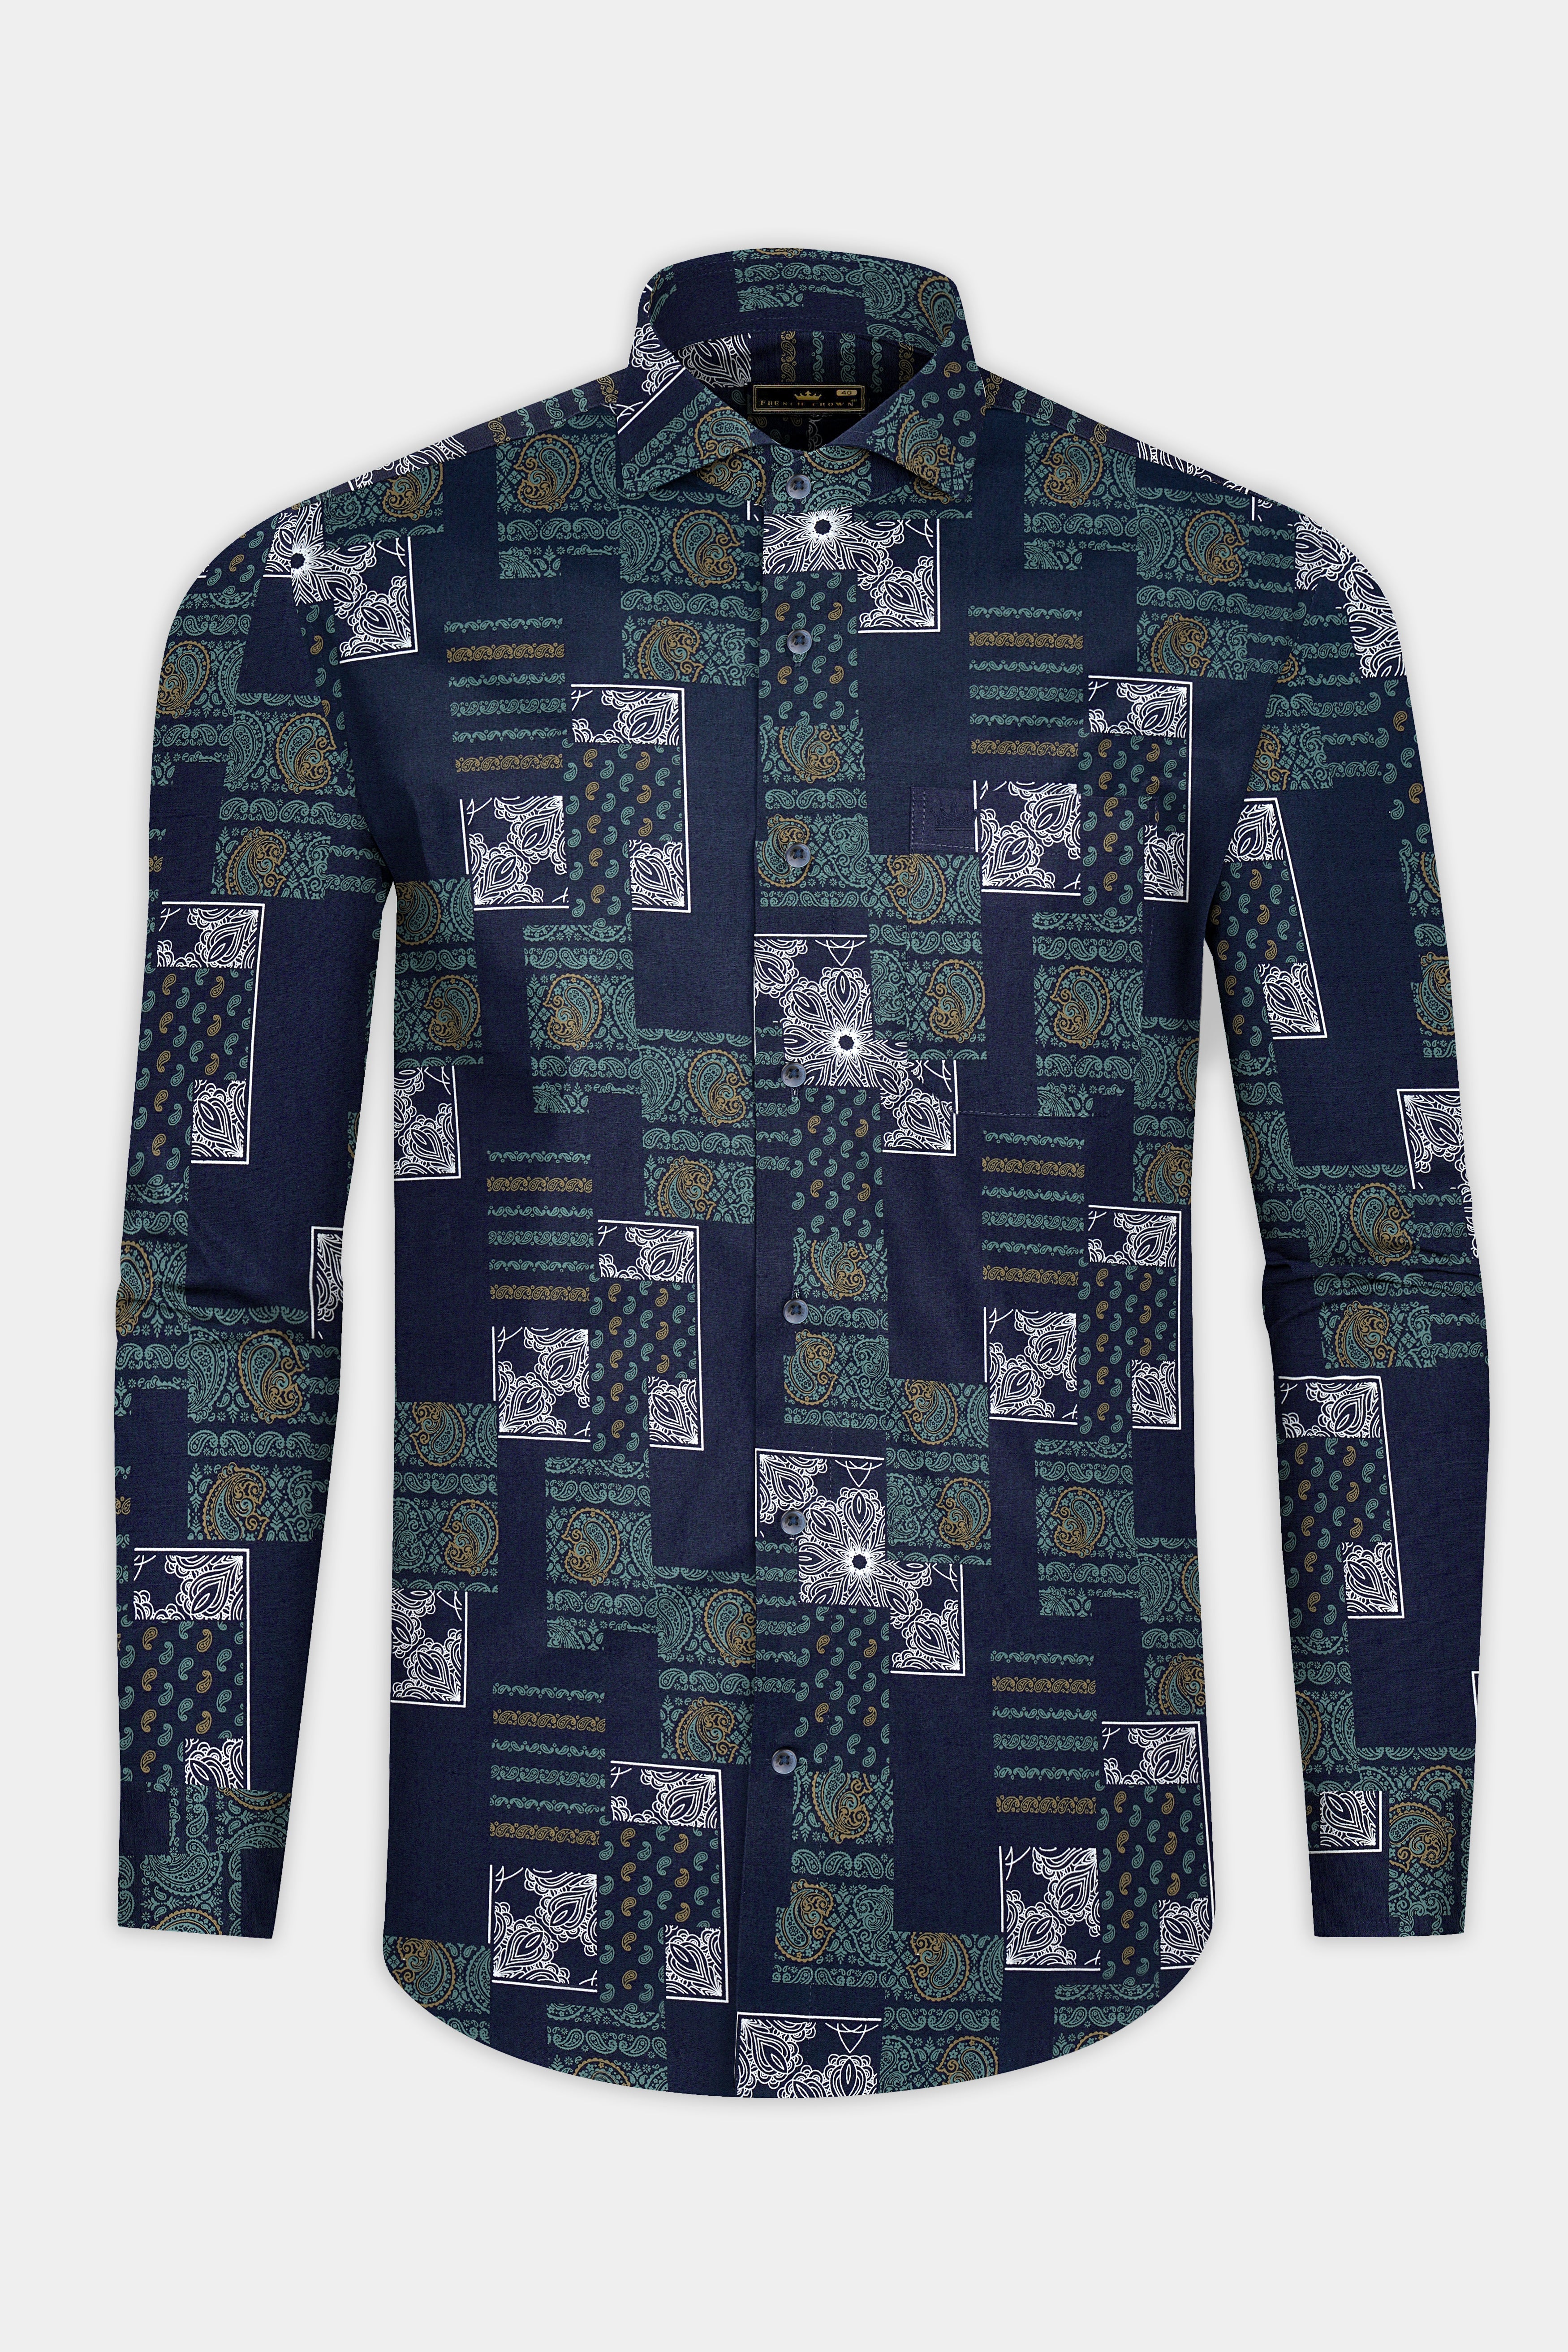 Tealish Blue Multicolour Design Printed Super Soft Premium Cotton Shirt